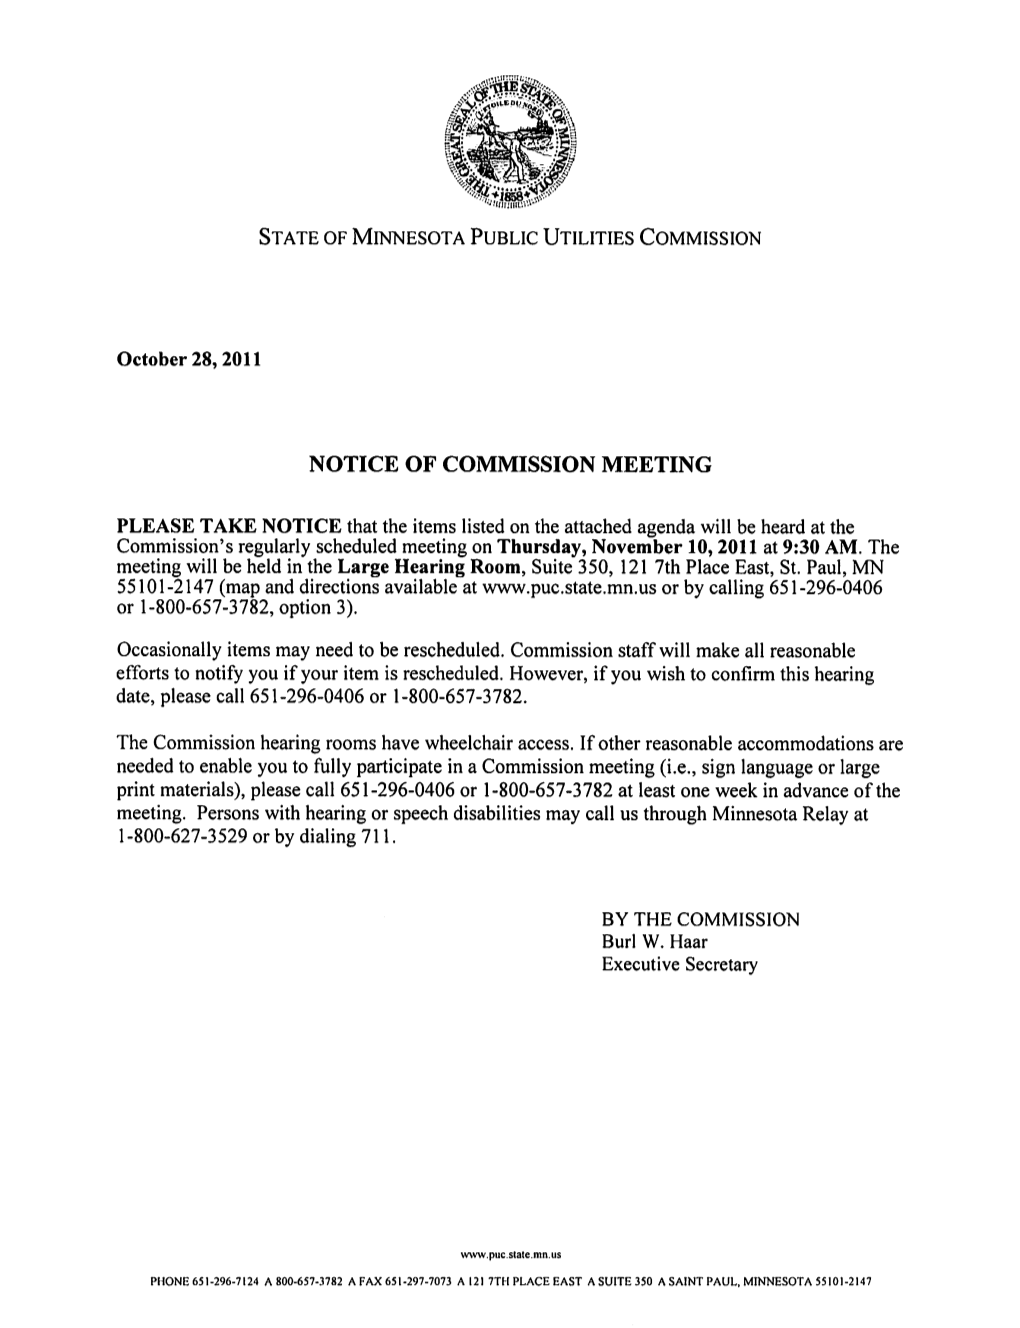 PUC Notice of November 10, 2011 Meeting